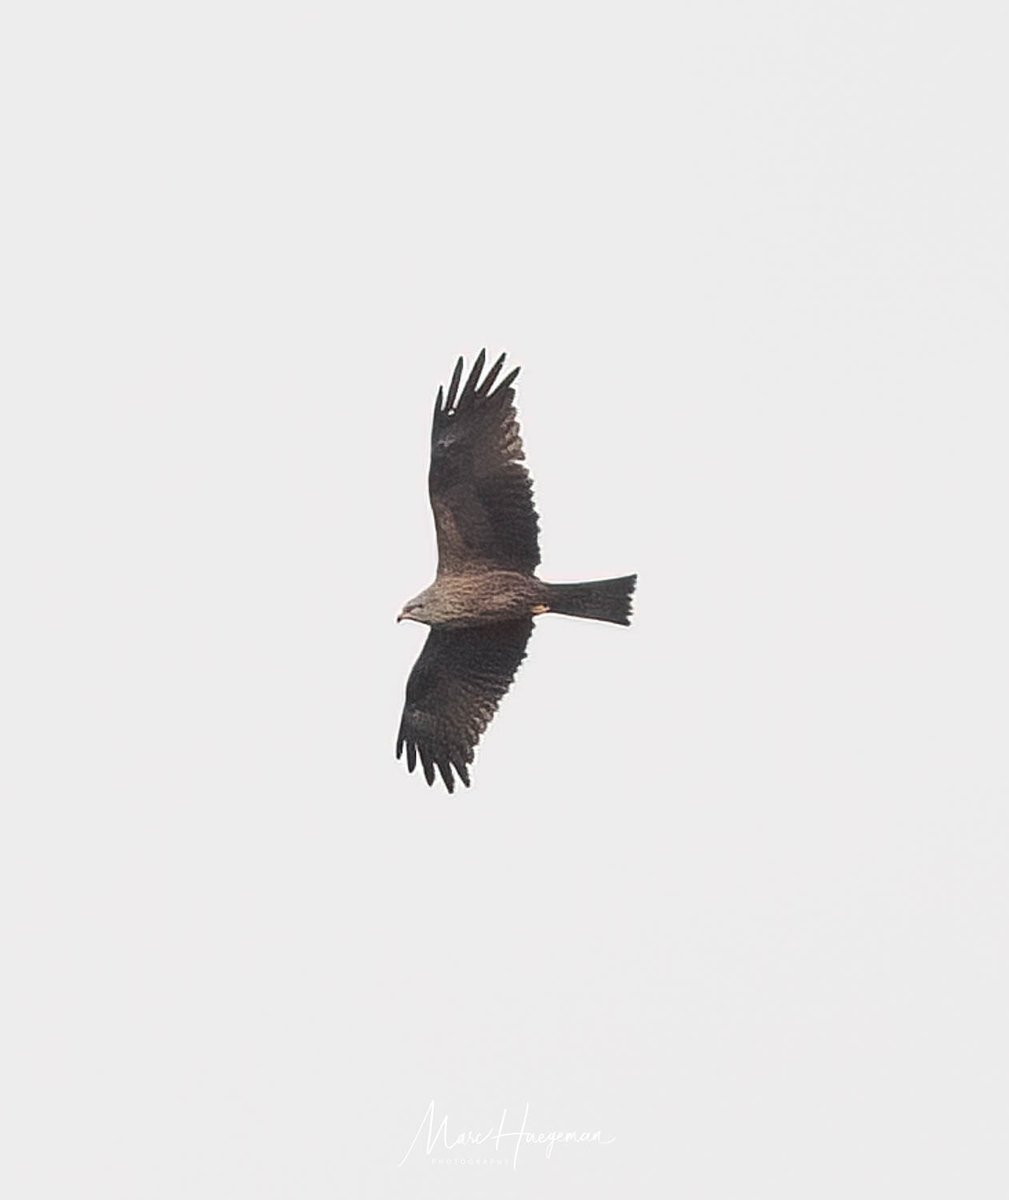 Two species of the Kite - not bad for one day (Belgium): Red Kite and Black Kite @Britnatureguide #BirdsSeenin2024 @Sovon @MijnNatuurpunt @vogelnieuws @VroegeVogels @sonybelgie #VogelsinBelgië @vogelinfo @Natures_Voice #kites